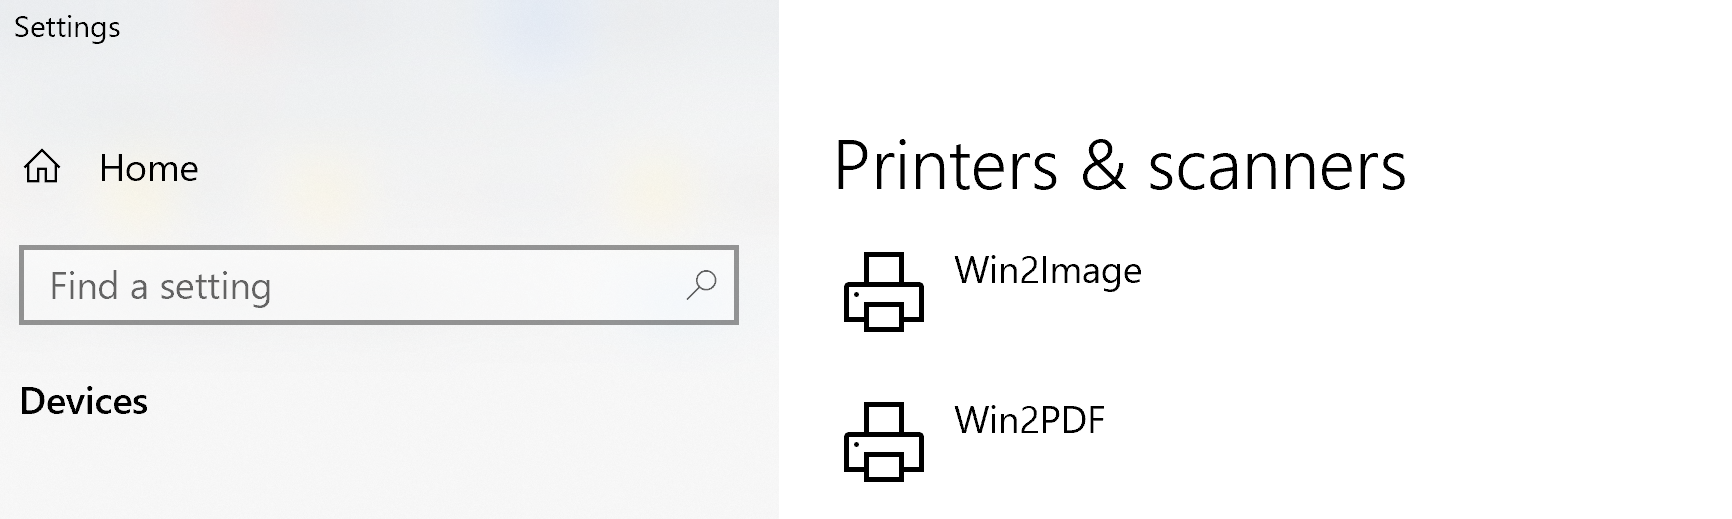 Win2Image and Win2PDF in the printers folder